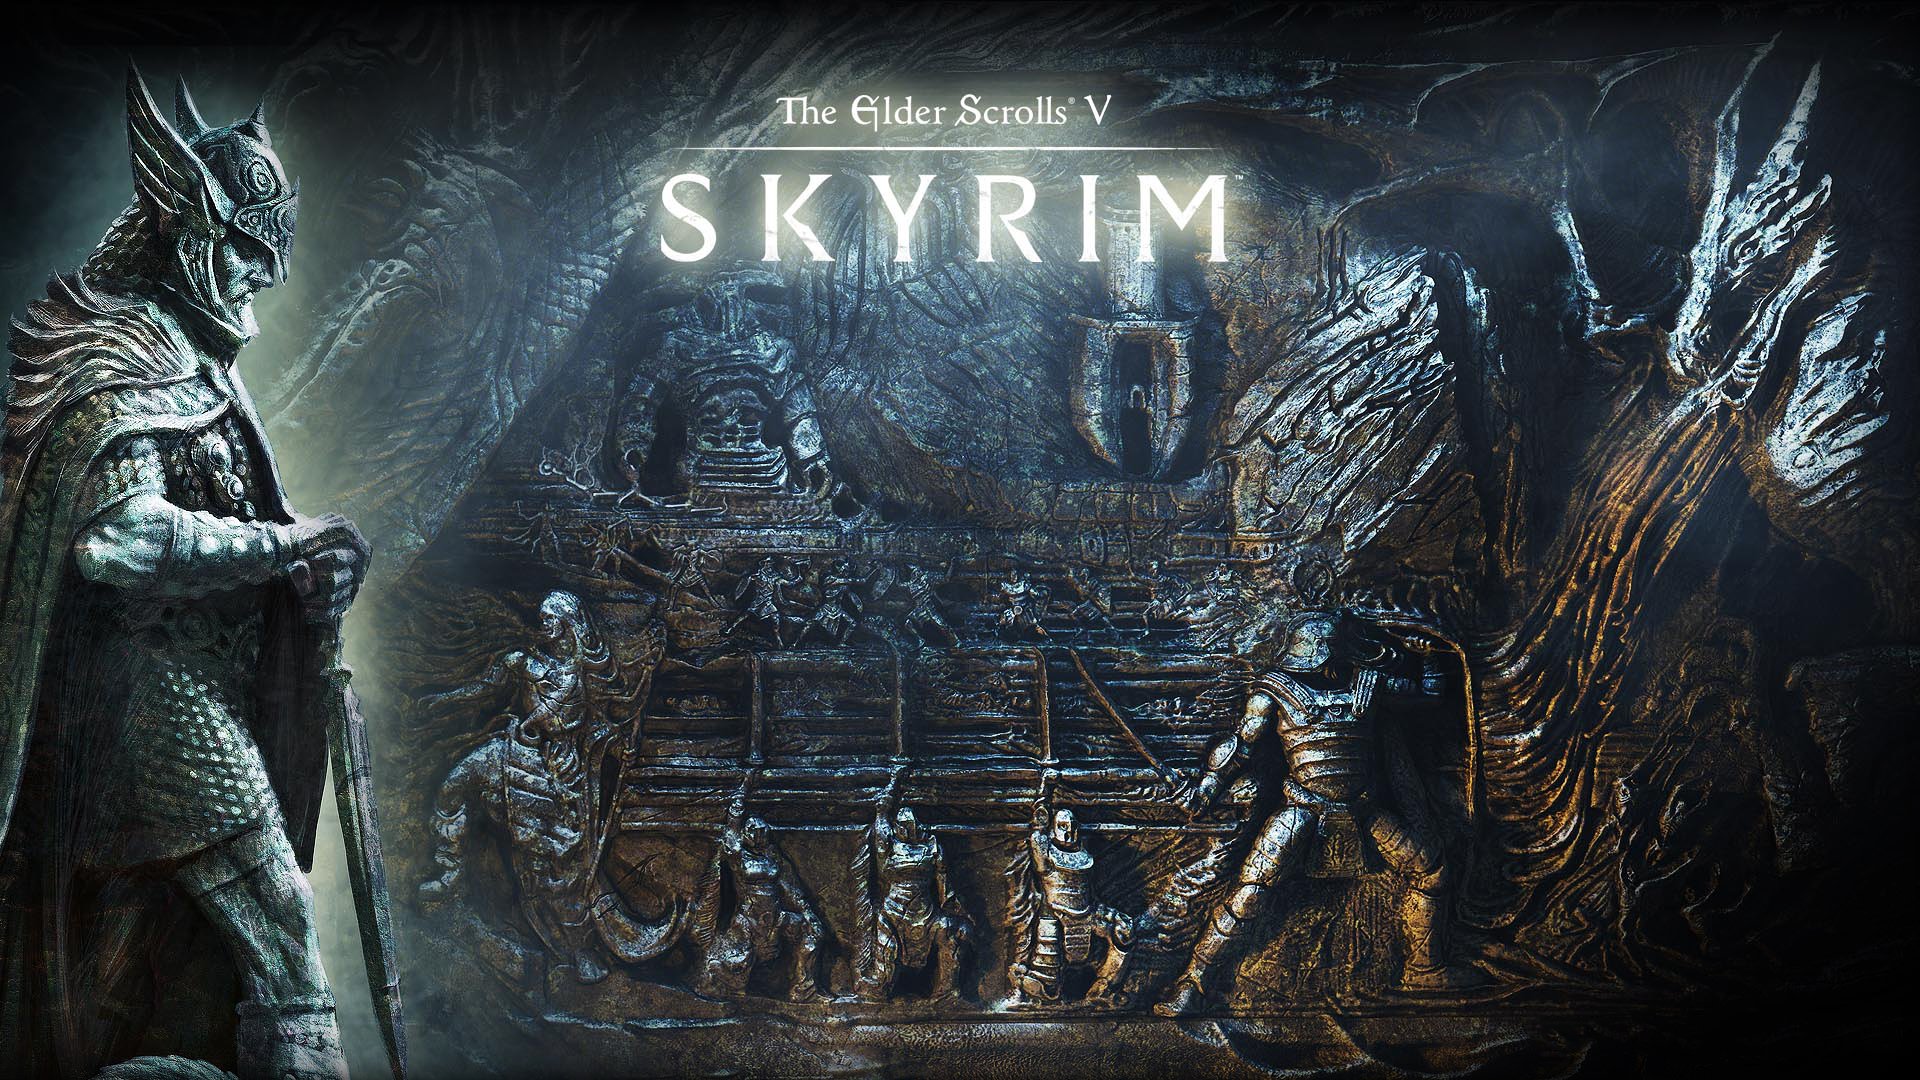 Skyrim desktop wallpaper featuring the video game The Elder Scrolls V: Skyrim.